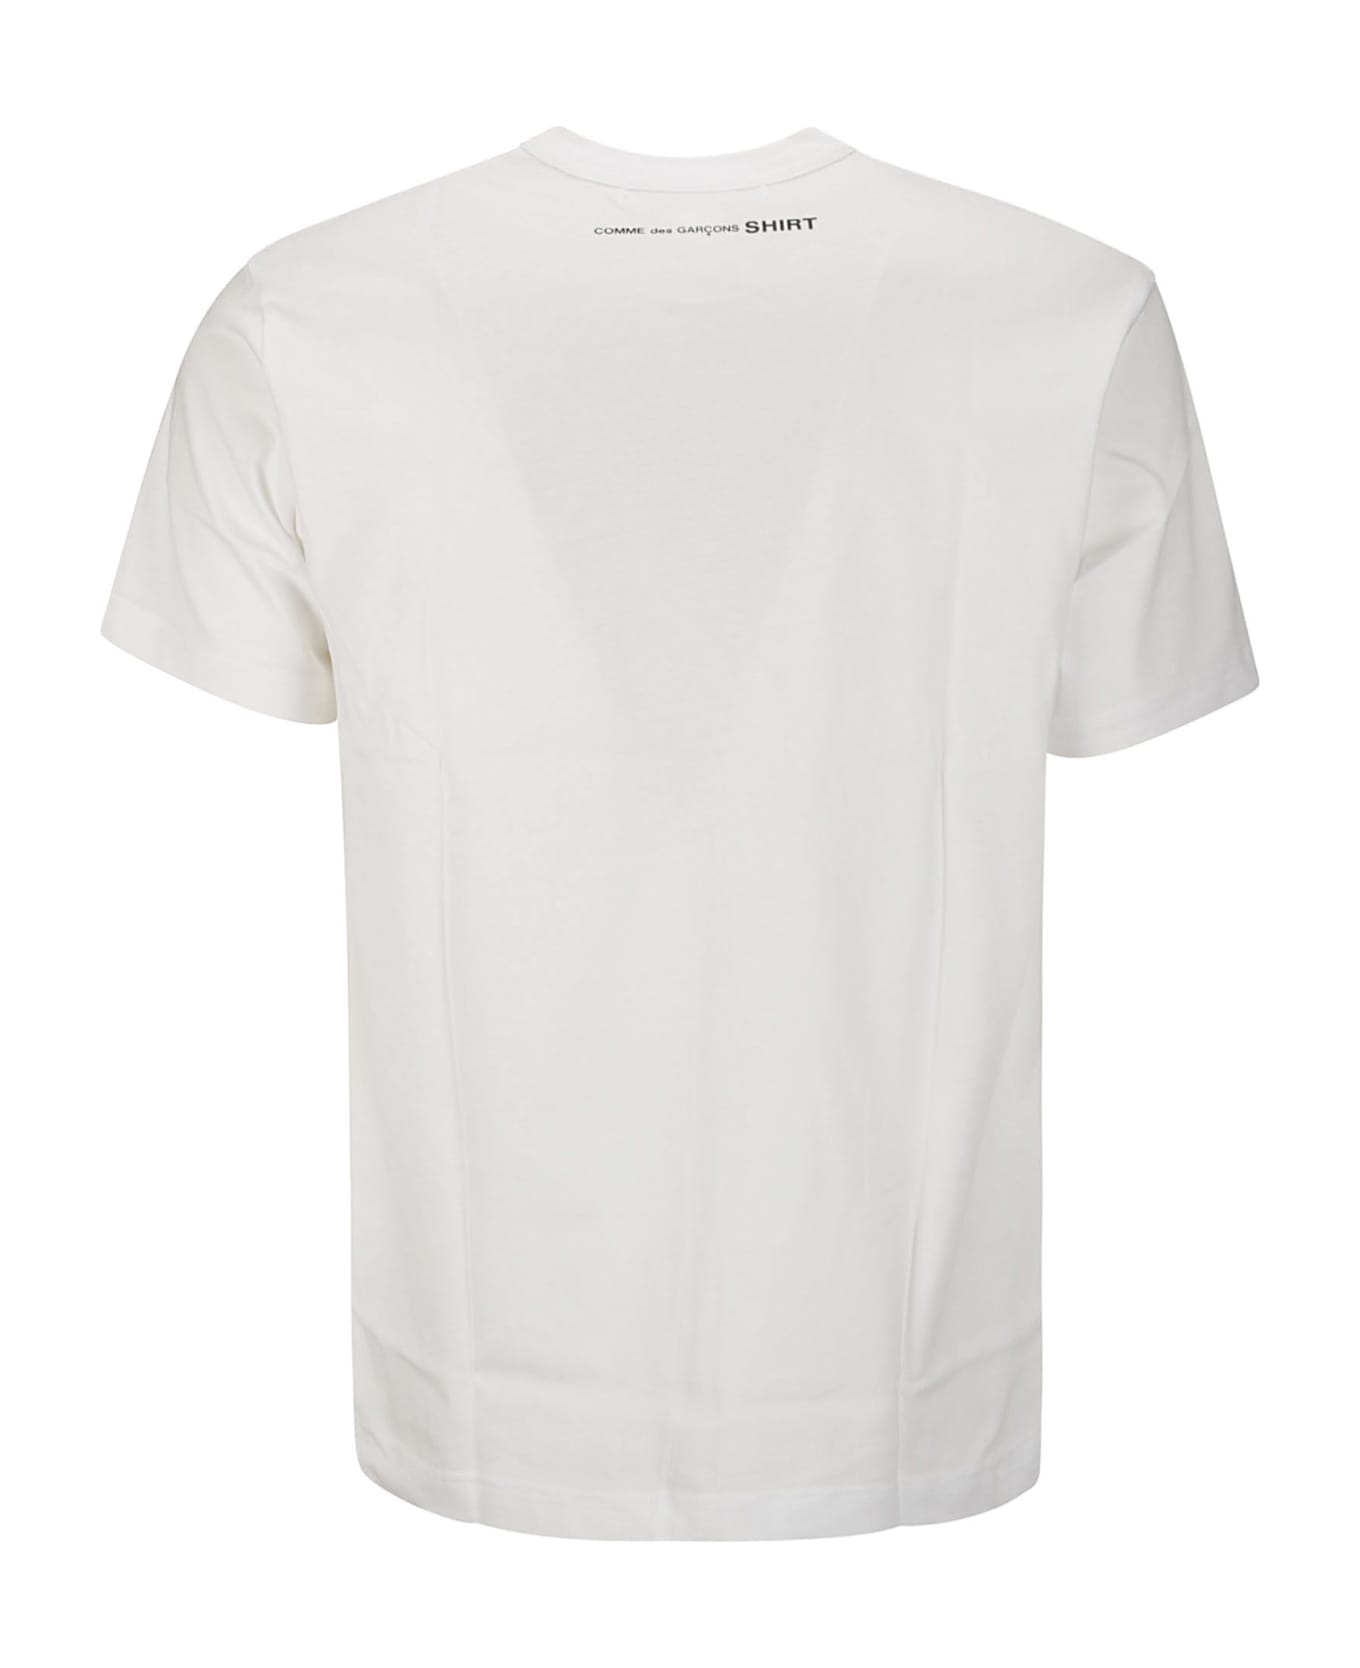 Comme des Garçons Shirt Cotton Jersey Plain With Printed Cdg Shirt L - WHITE シャツ